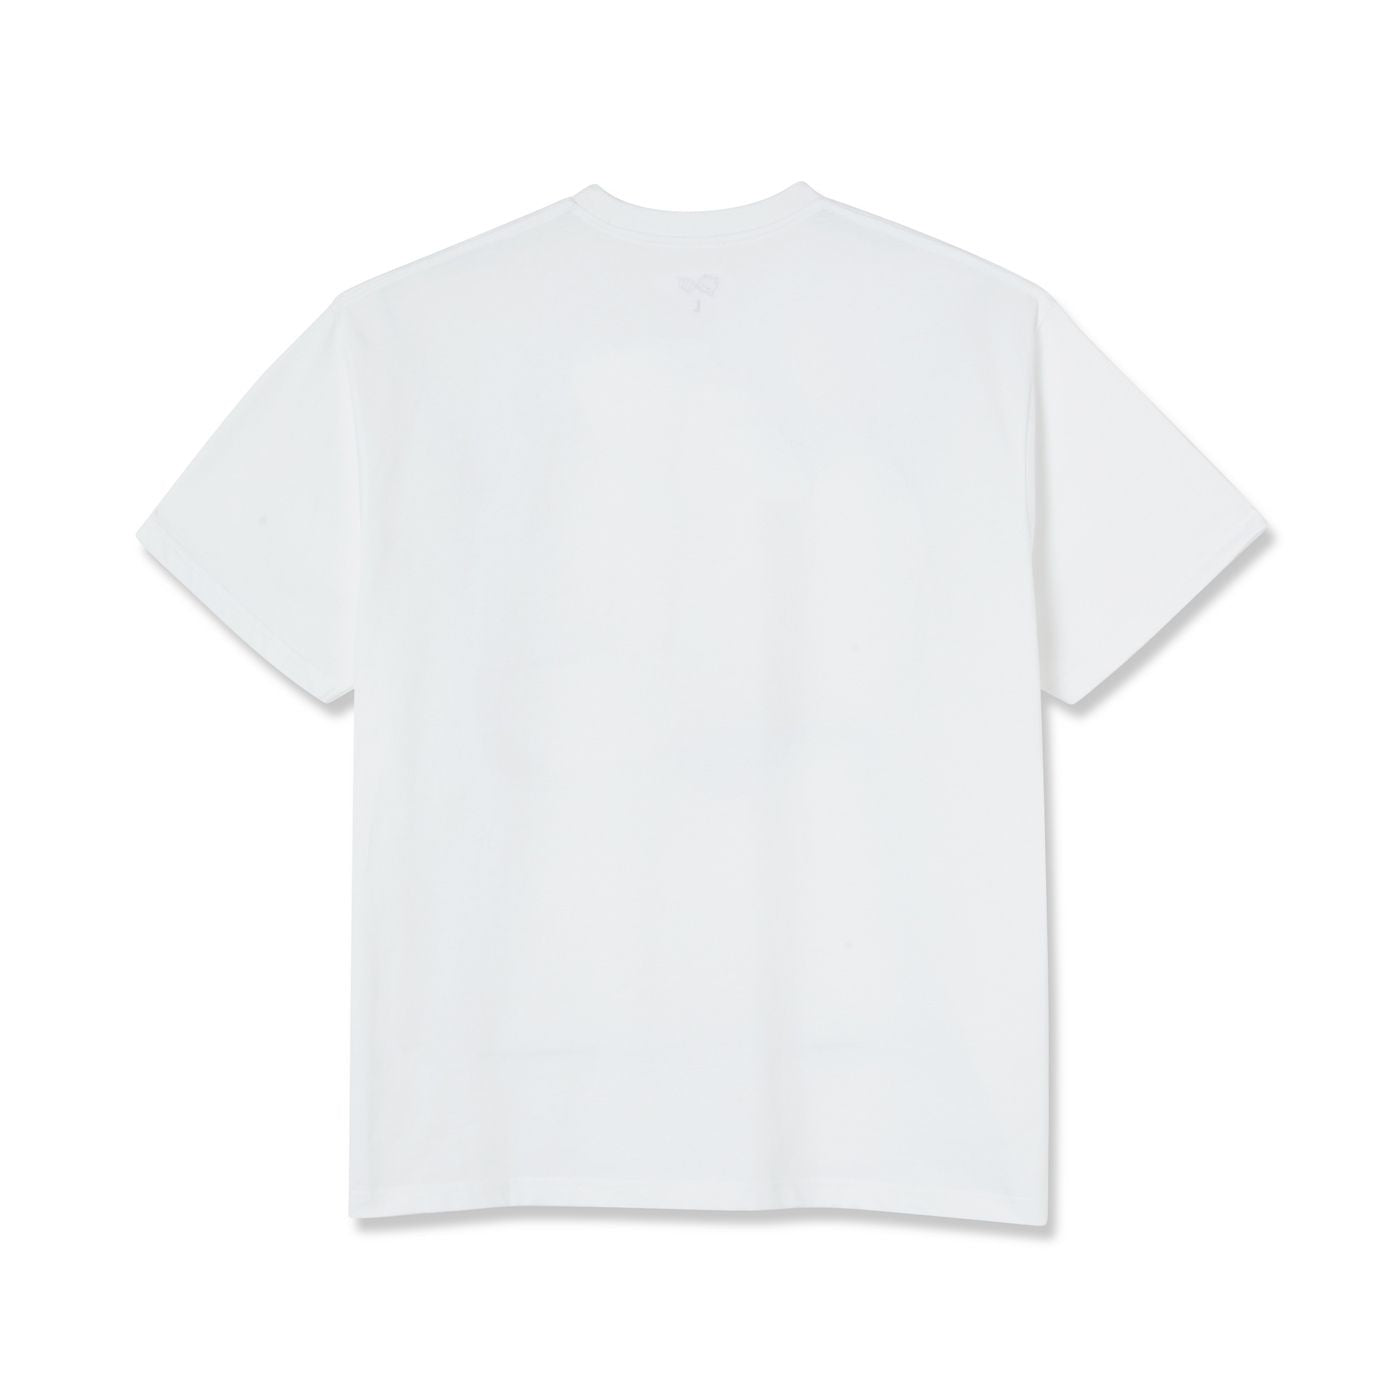 Camiseta Last Resort AB X Spitfire Matchbox - Blanco